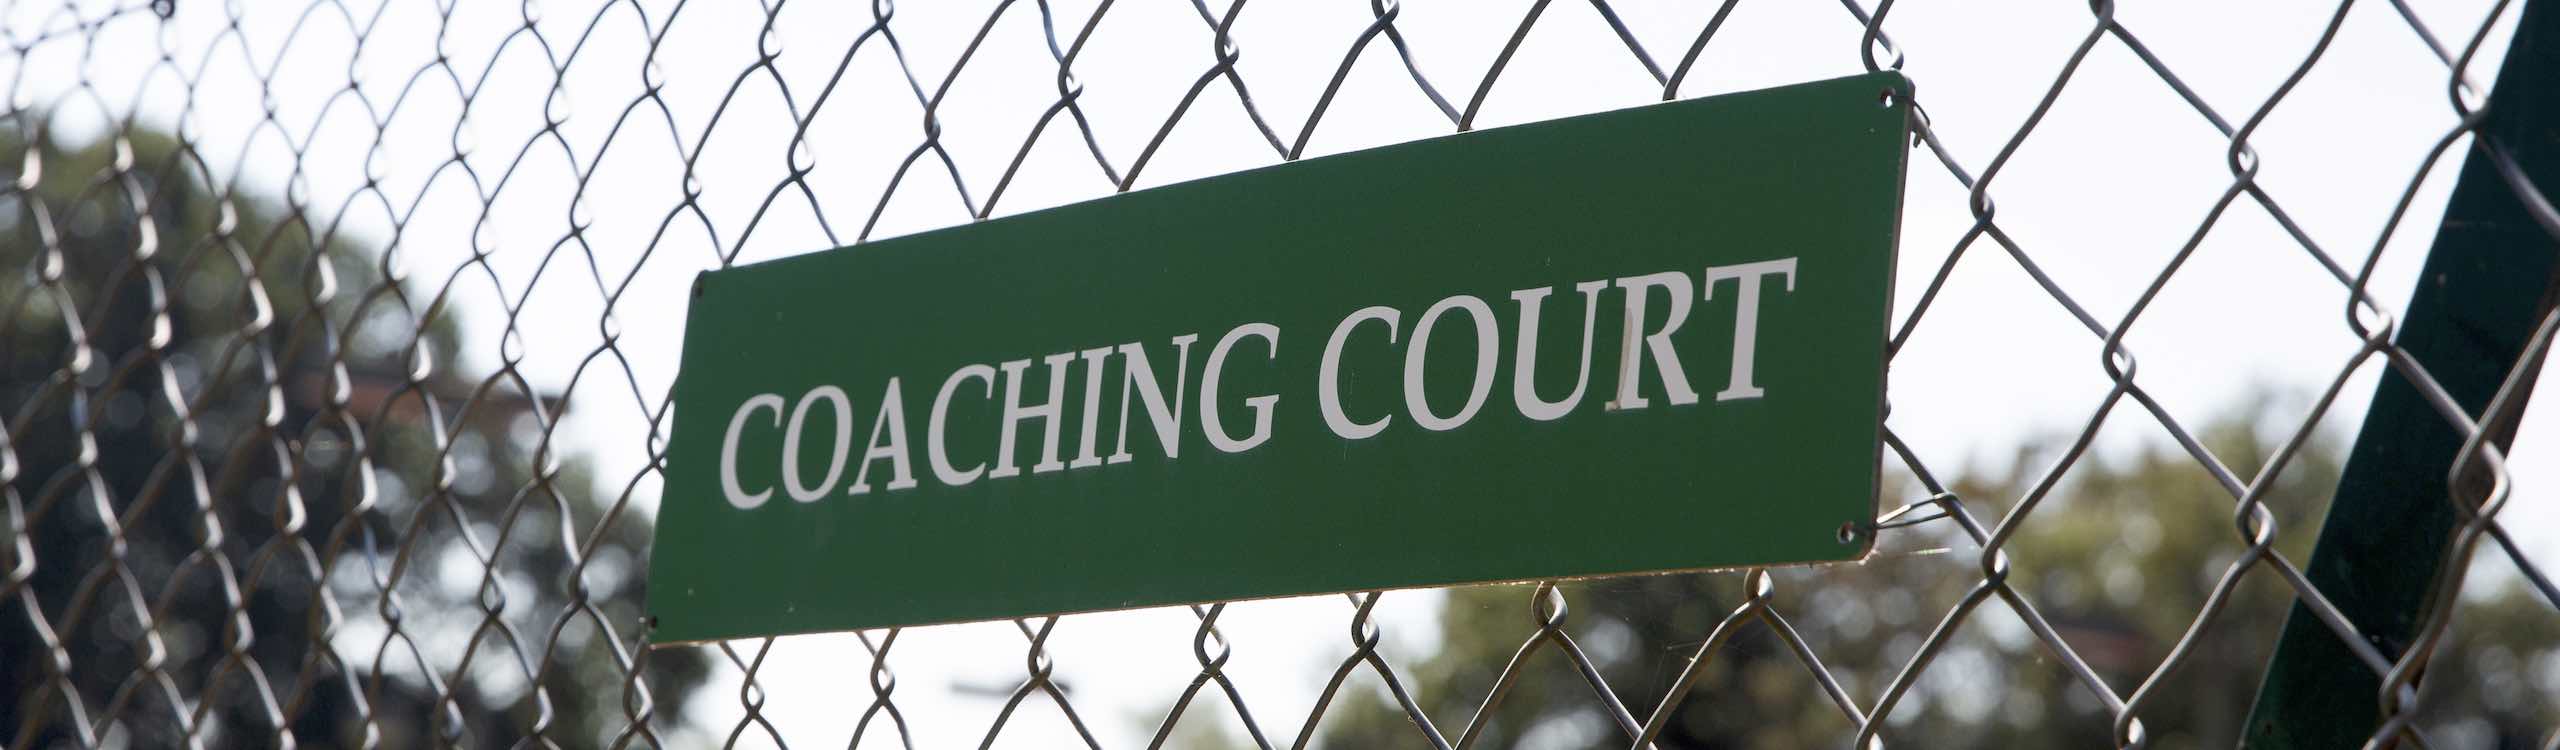 Coaching at Dorking Lawn Tennis & Squash Club